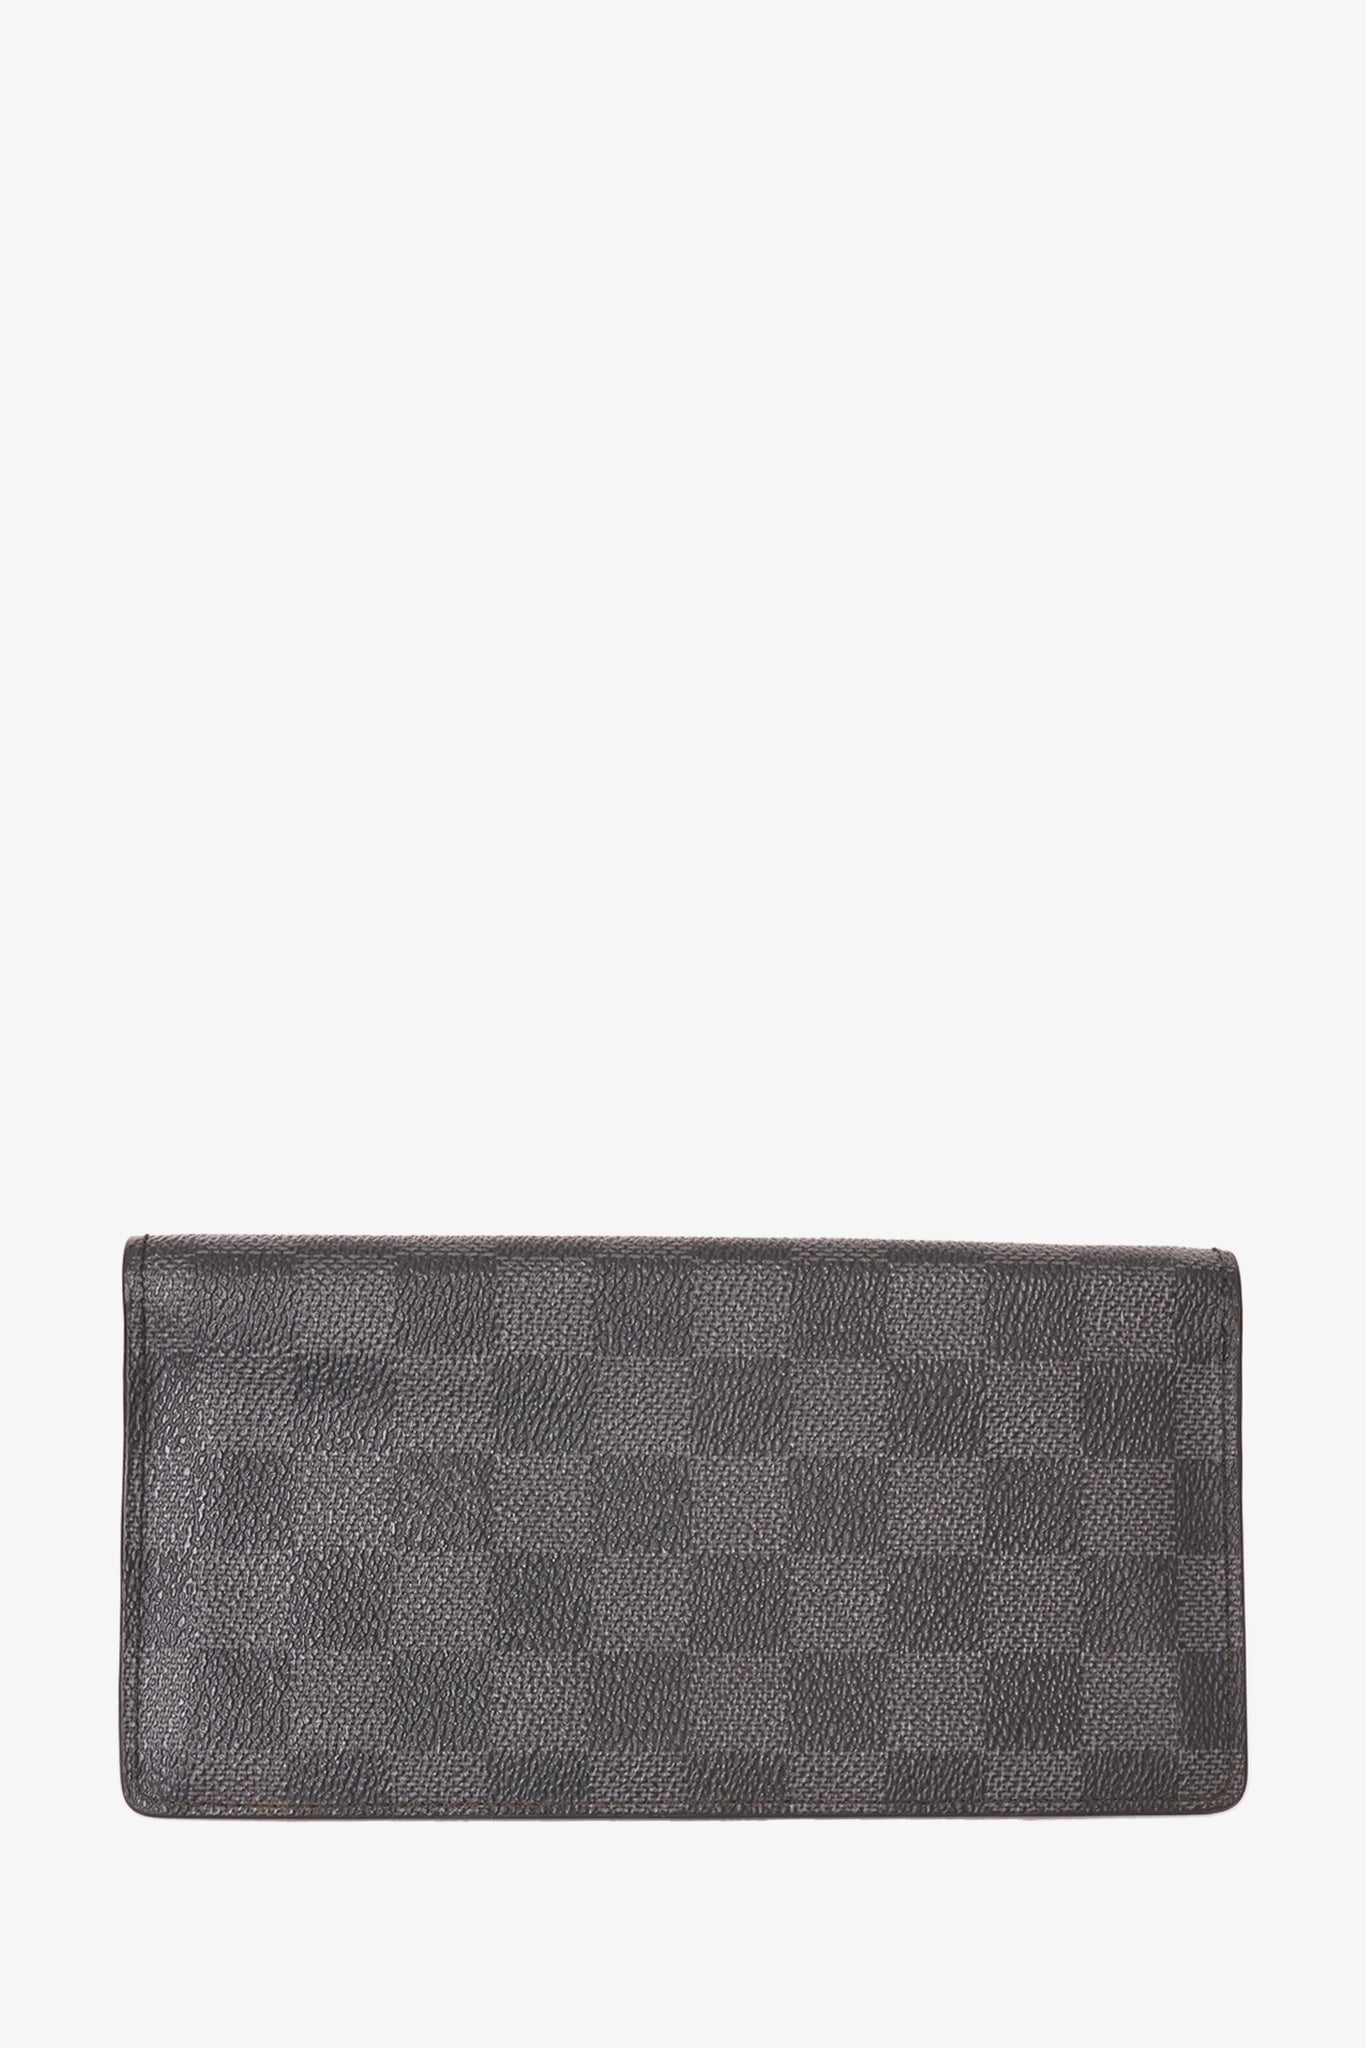 Shop Louis Vuitton MONOGRAM 2019 SS Wallet trunk (M20249, M20250, M20249,  M20250) by sweetピヨ